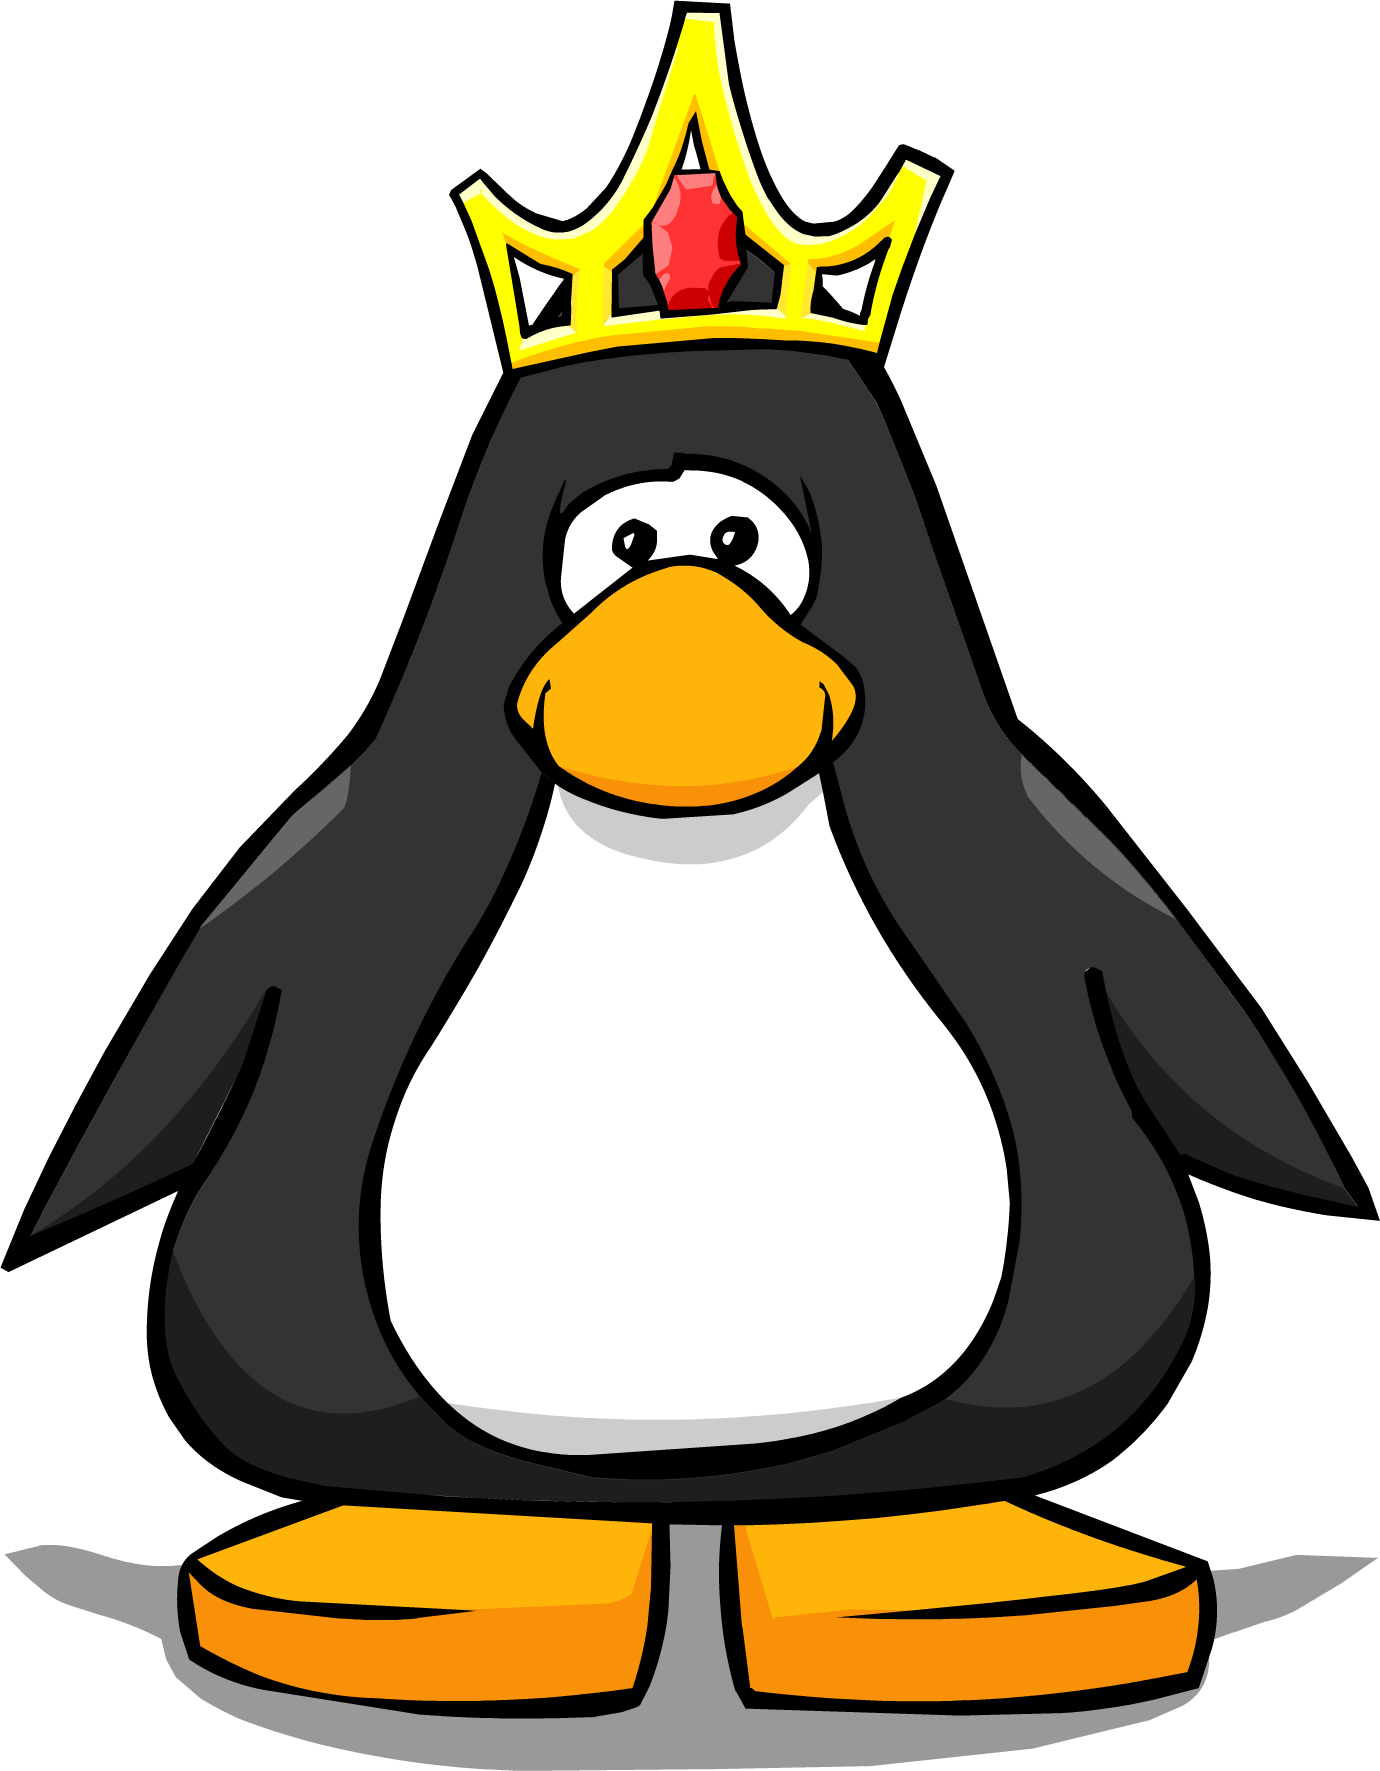 Queen's Crown Pc - Penguin With Santa Hat (1380x1771)